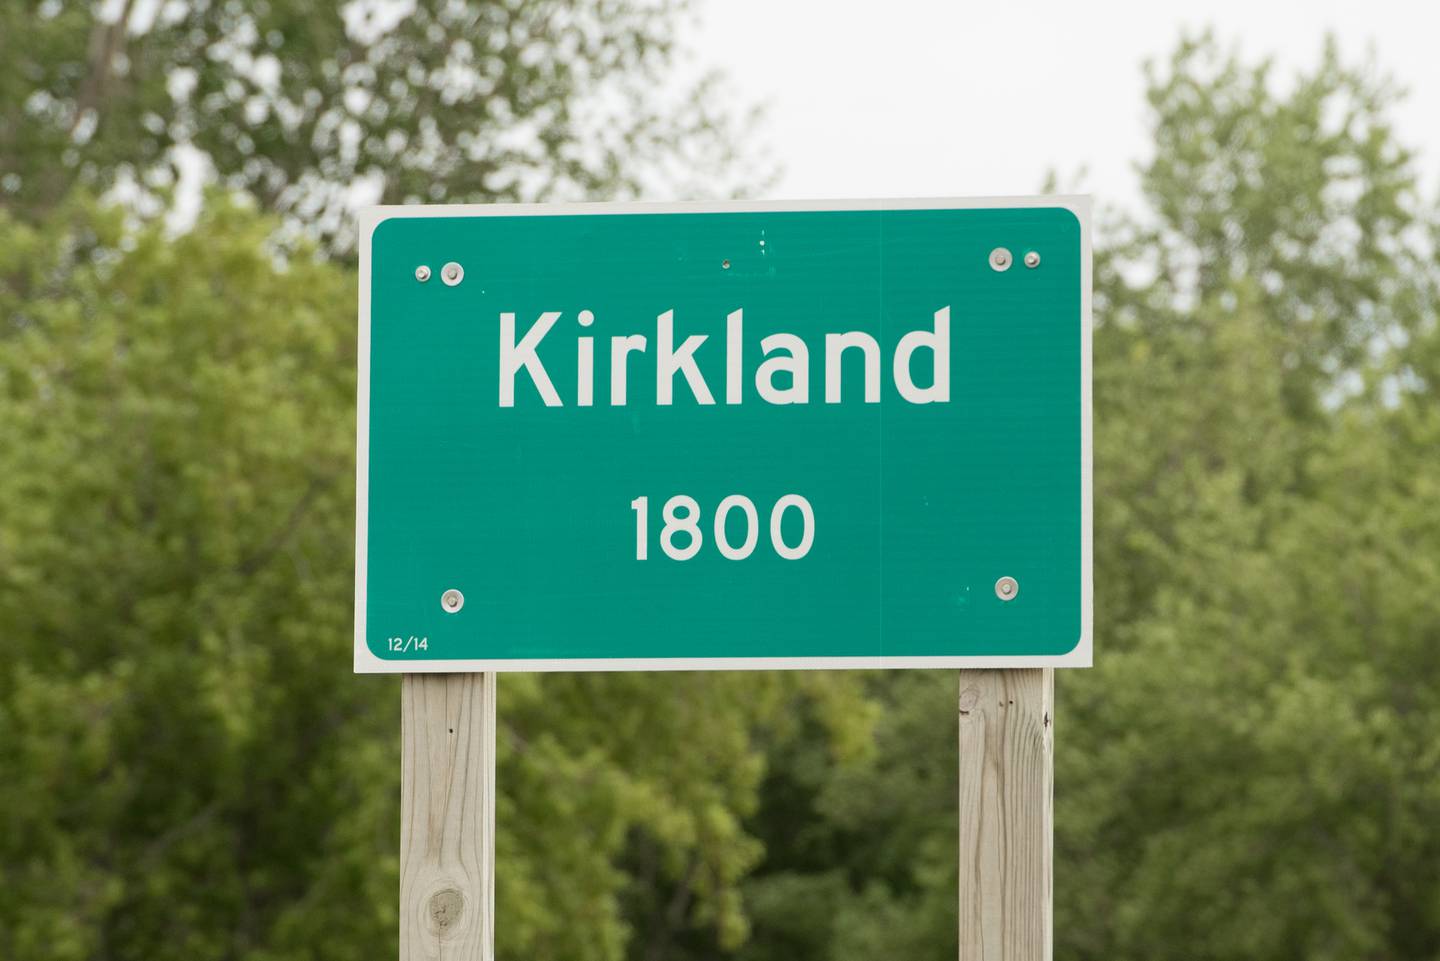 Kirkland population sign in Kirkland, IL